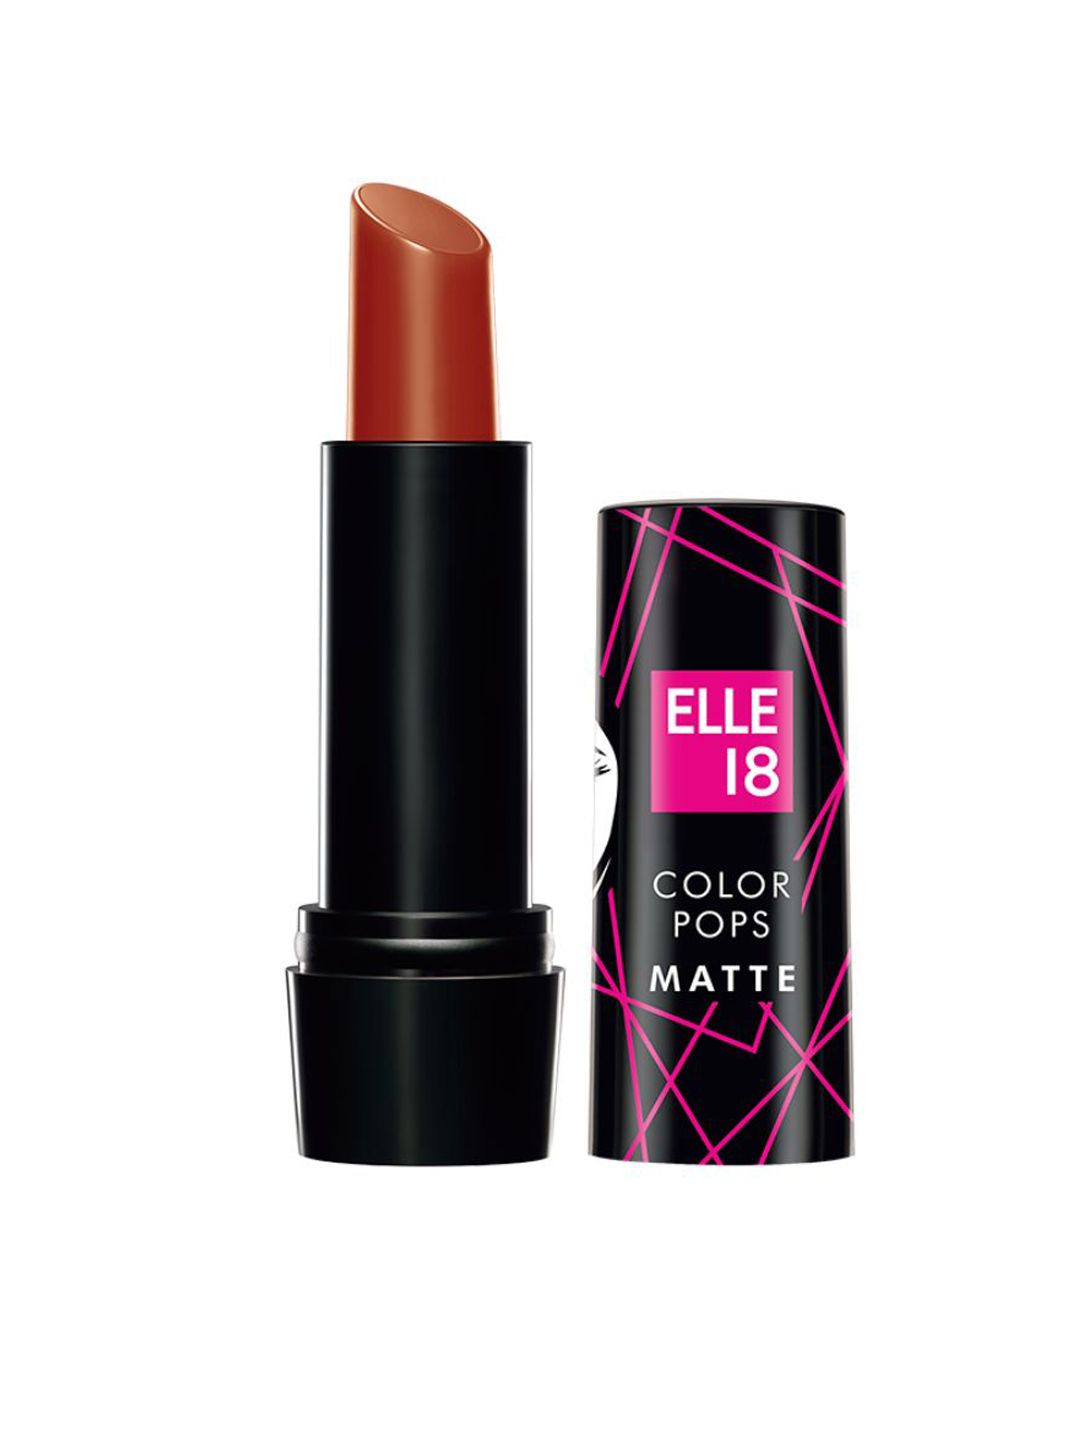 Elle 18 Color Pop Matte Lip Color B3 - Rust Sienna 4.3 g Price in India